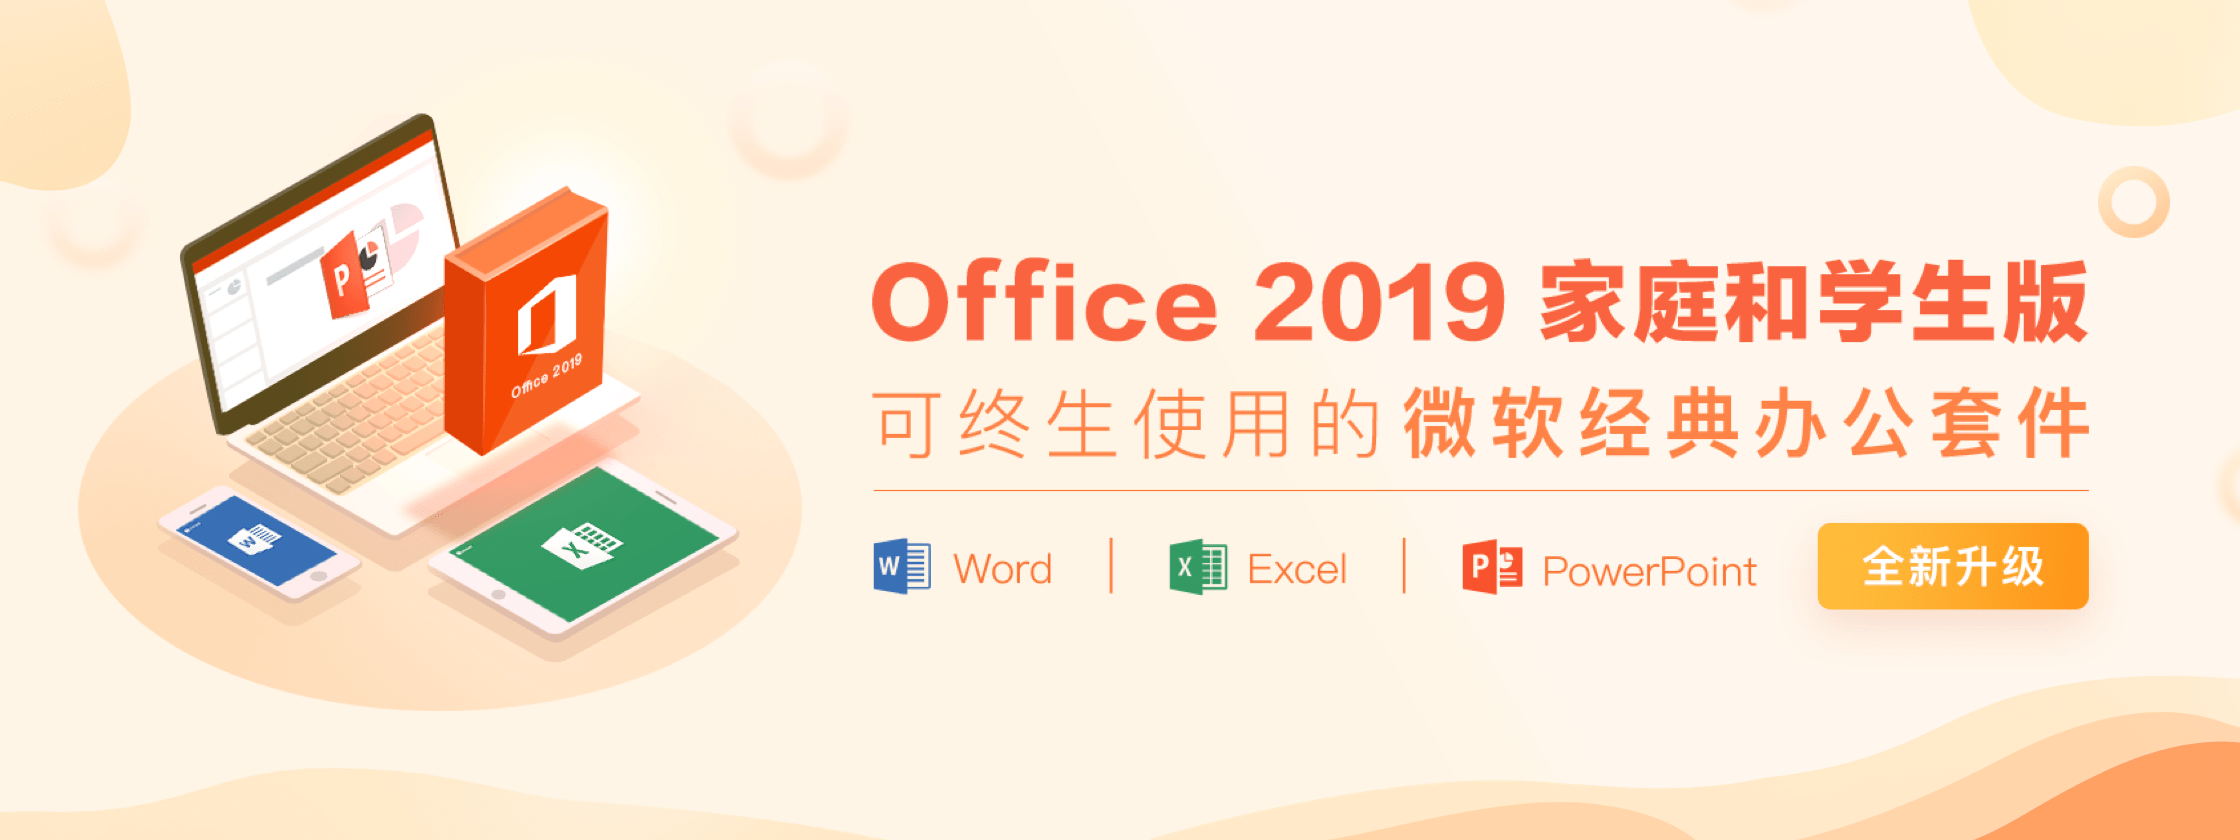 Office 2019 家庭和学生版: 可终生使用的微软经典办公套件，含 Word、Excel 和 PowerPoint